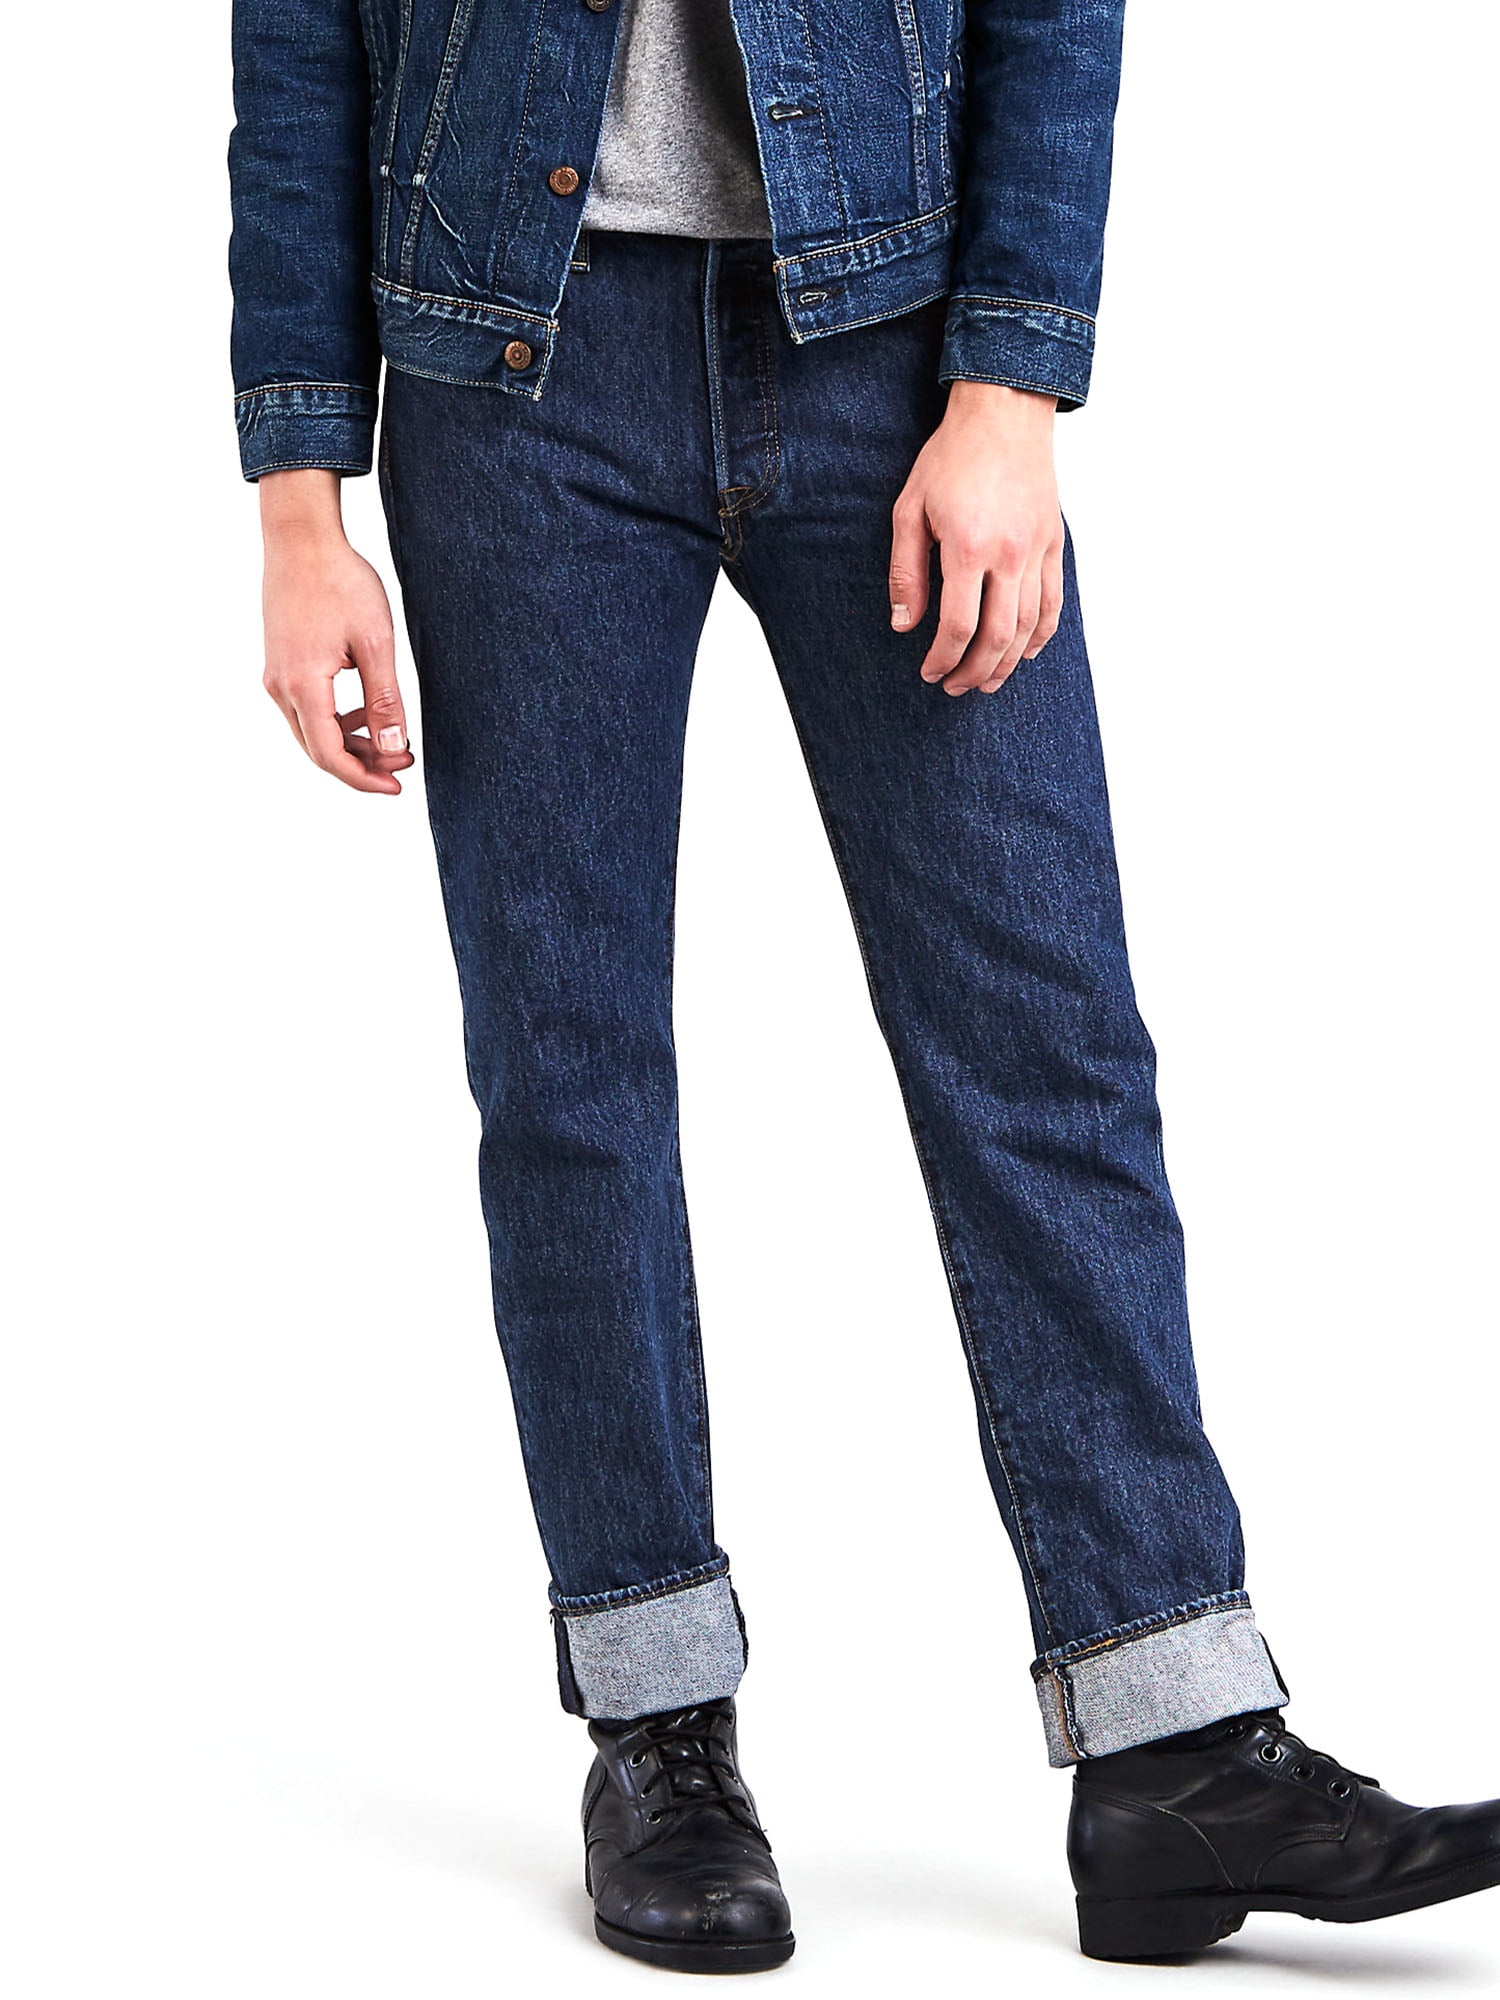 Levi's 501 Original Jeans - Walmart.com